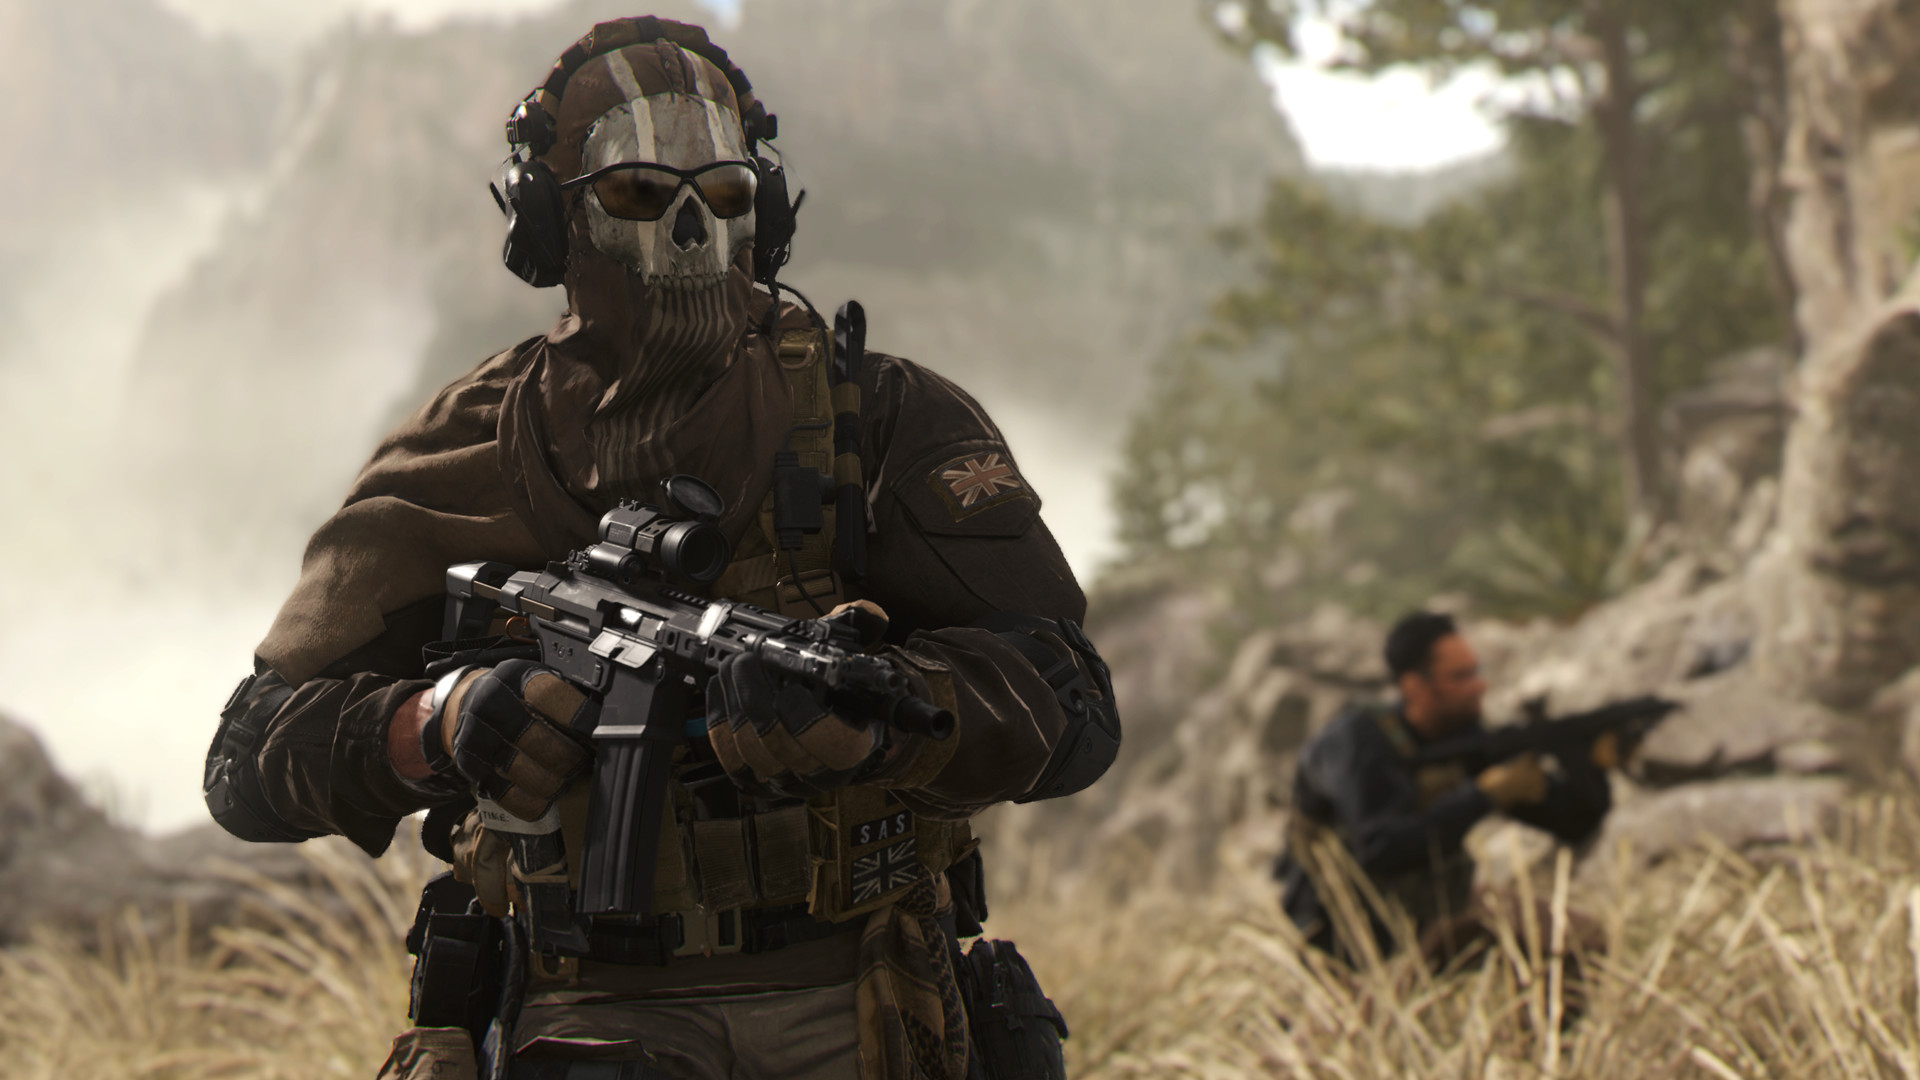 Call Of Duty: Modern Warfare II Cross-Gen Bundle XBOX One / Xbox Series X,S CD Key